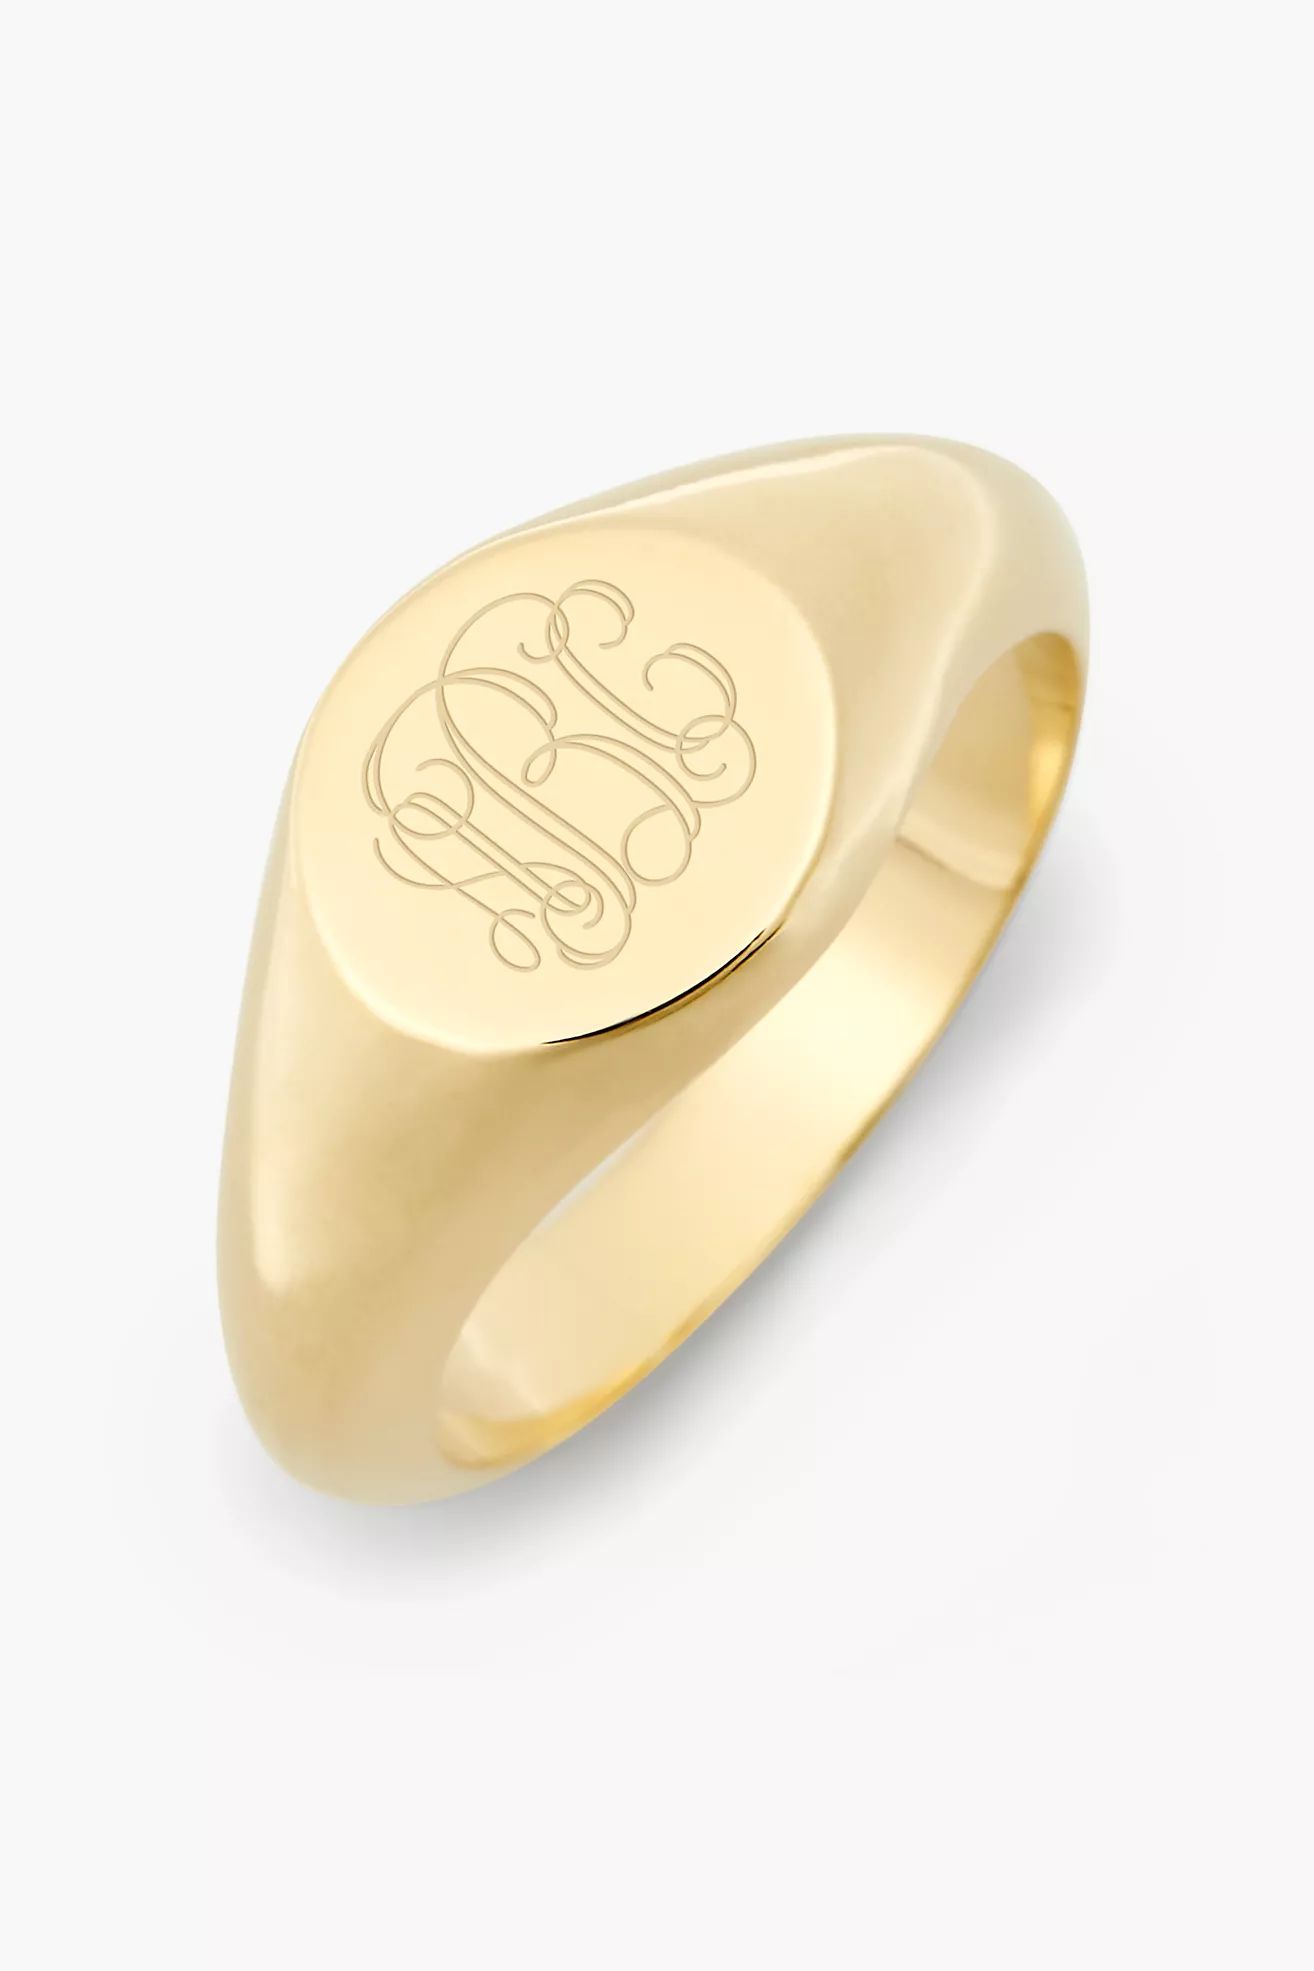 Brook & York Custom Monogram Petite Signet Ring | Anthropologie (US)